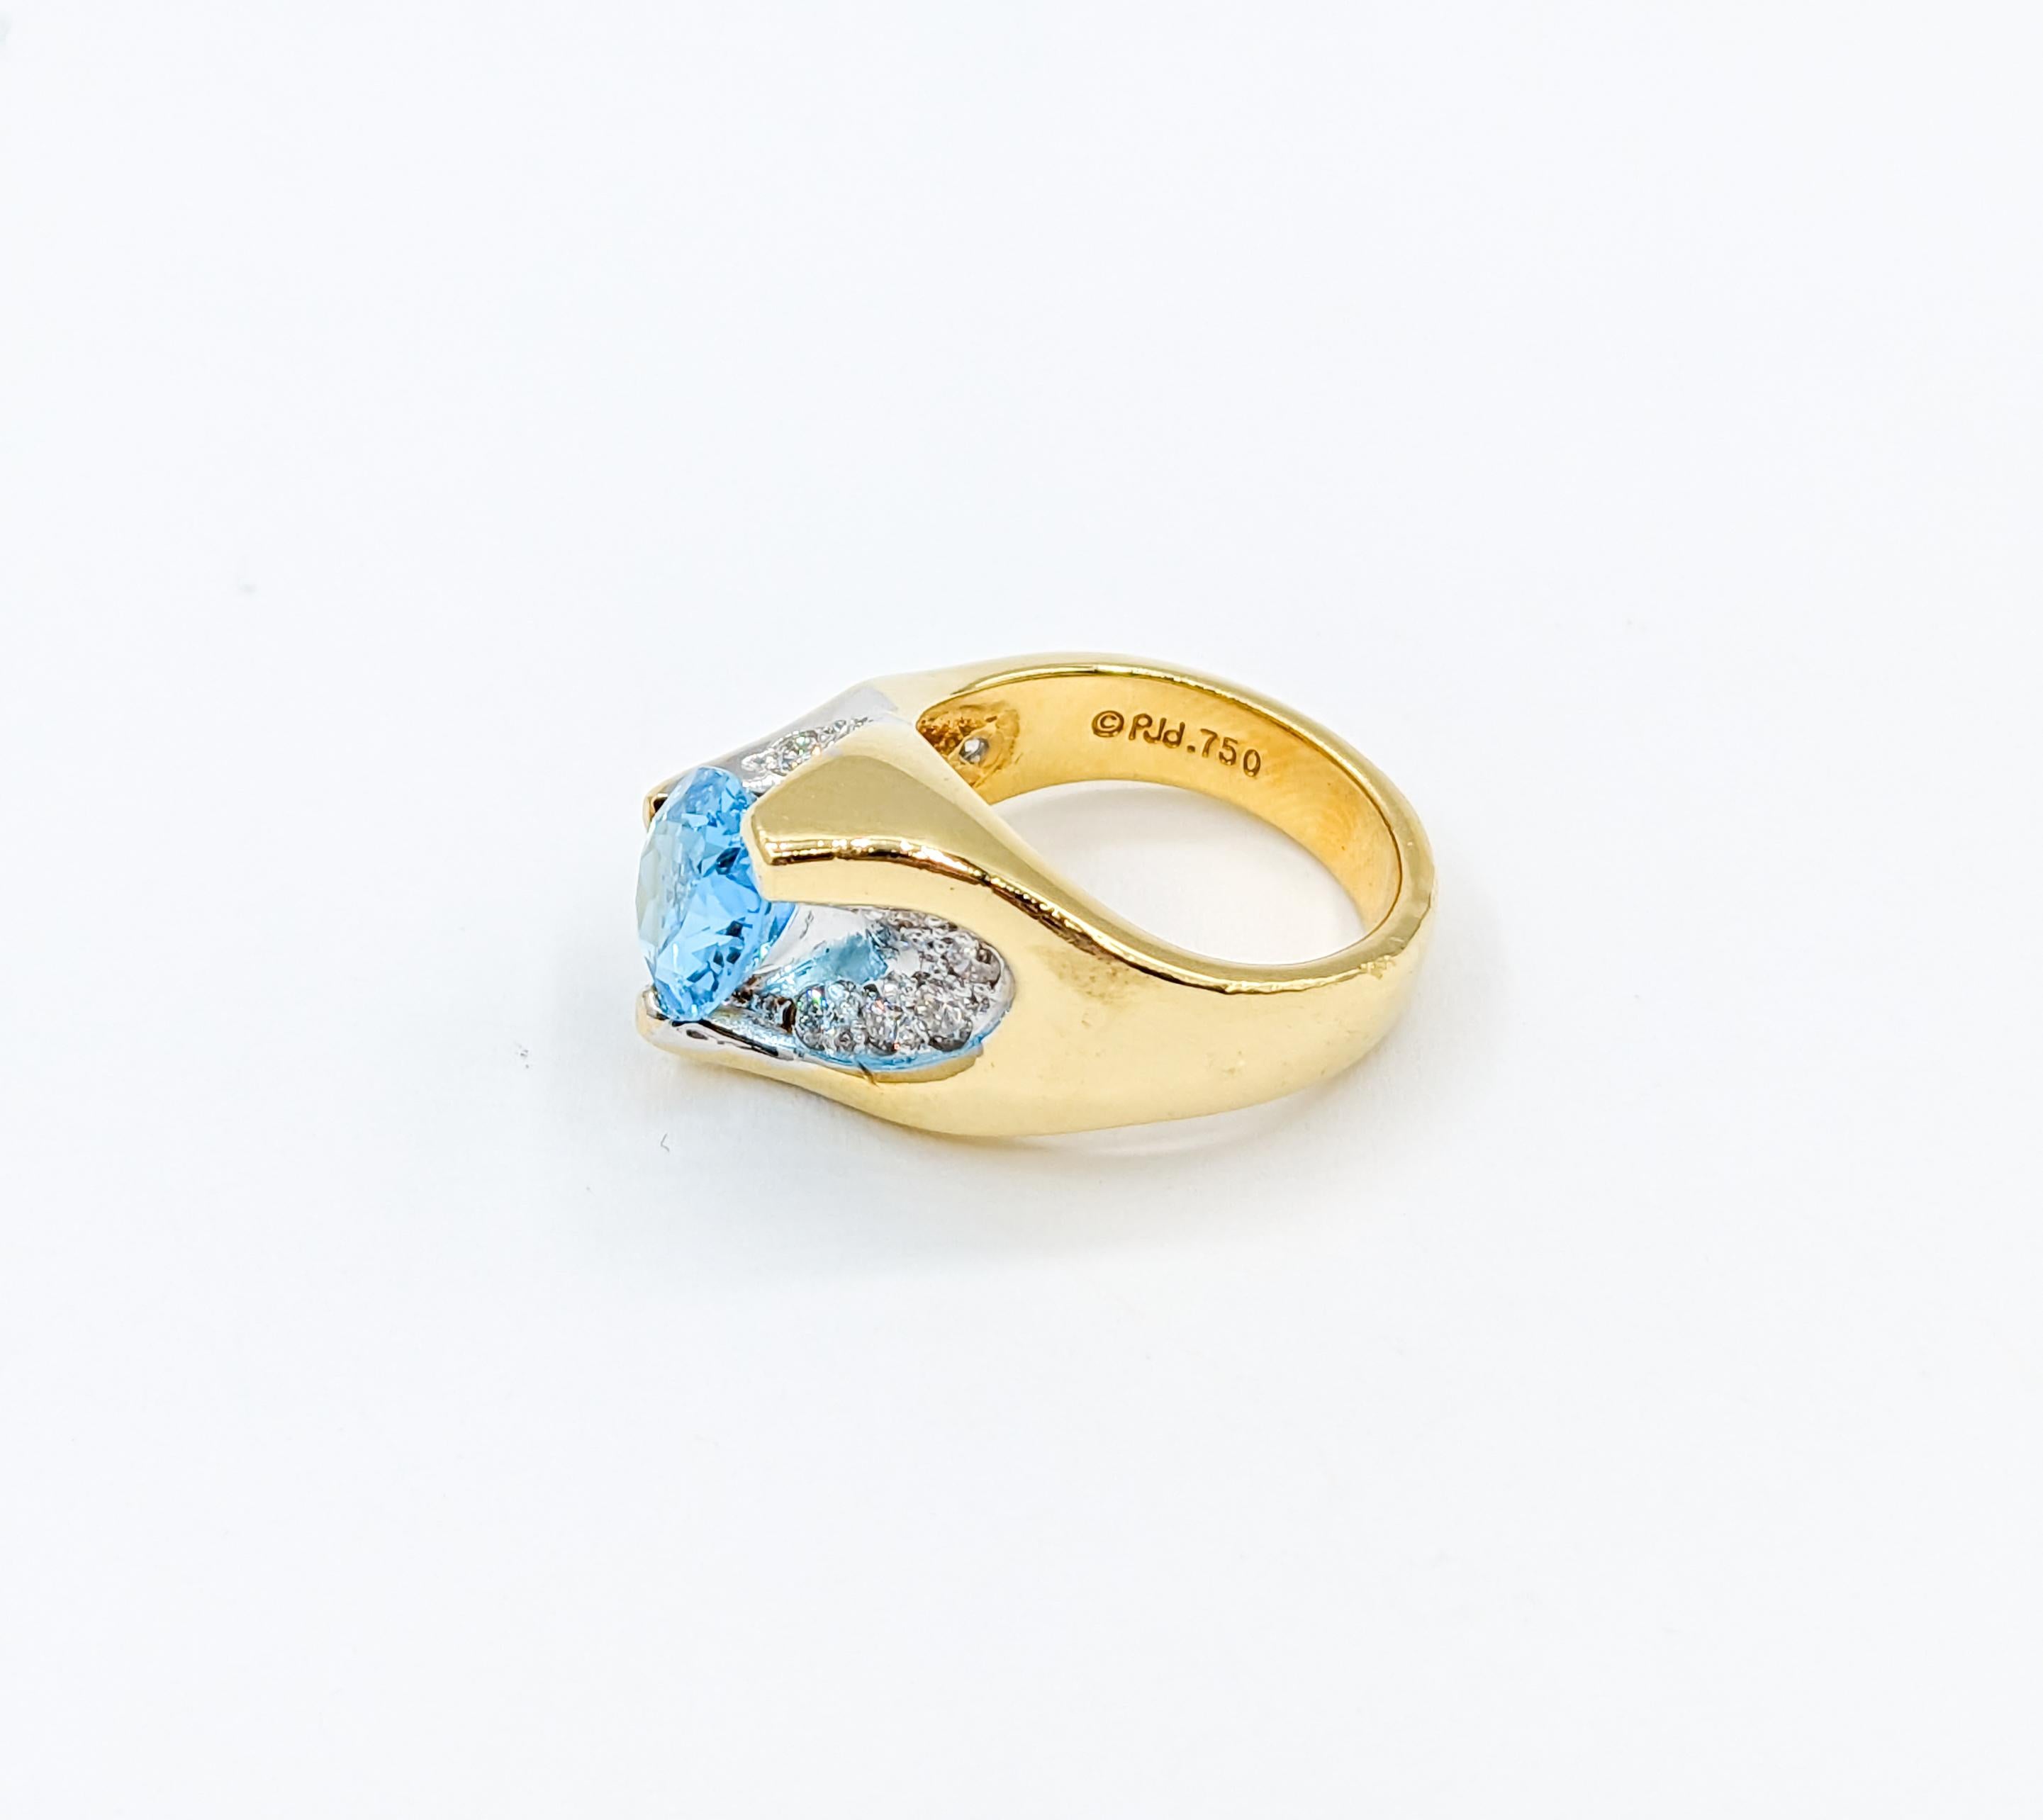 Artistic Blue Topaz & Diamond Cocktail Ring in 18k Gold For Sale 3